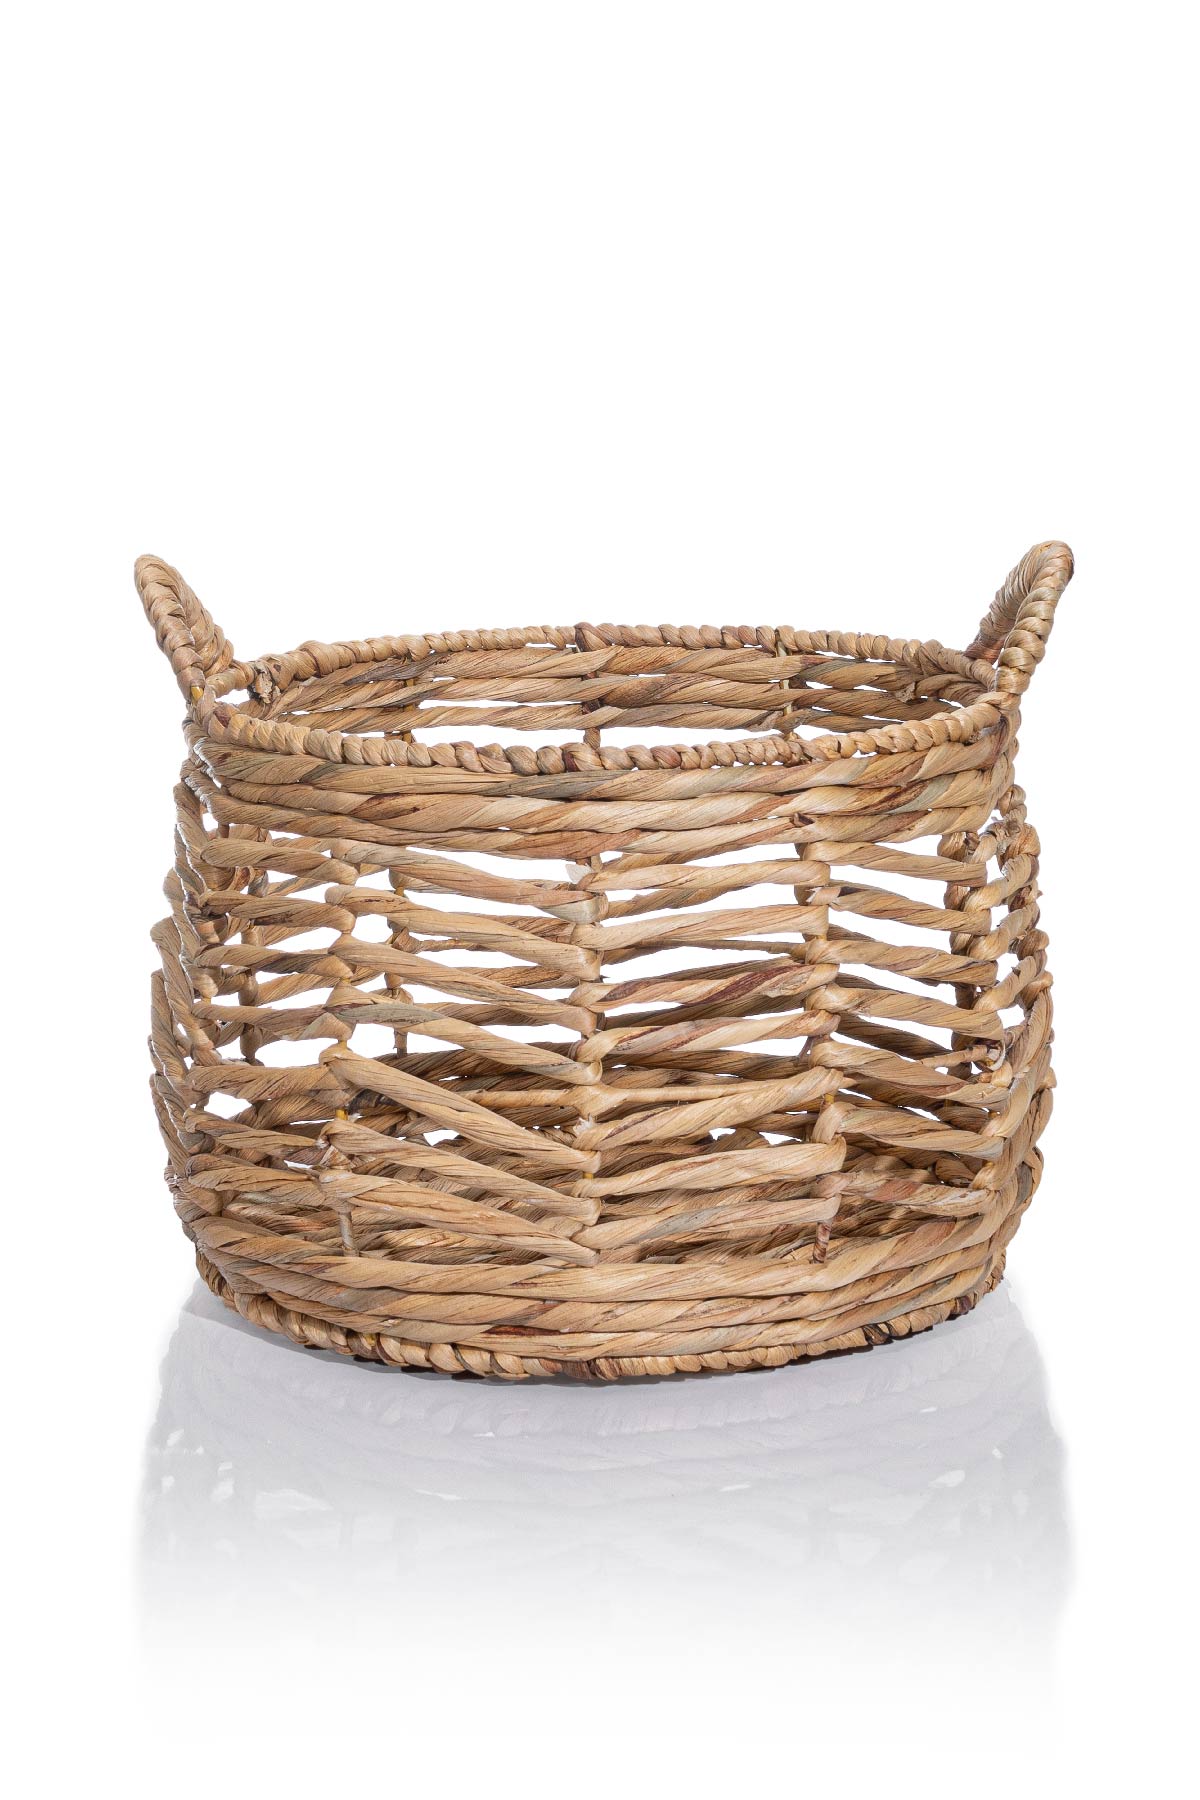 Meander Natural Handmade Rattan Knitted Water Hyacinth Basket 30x31cm